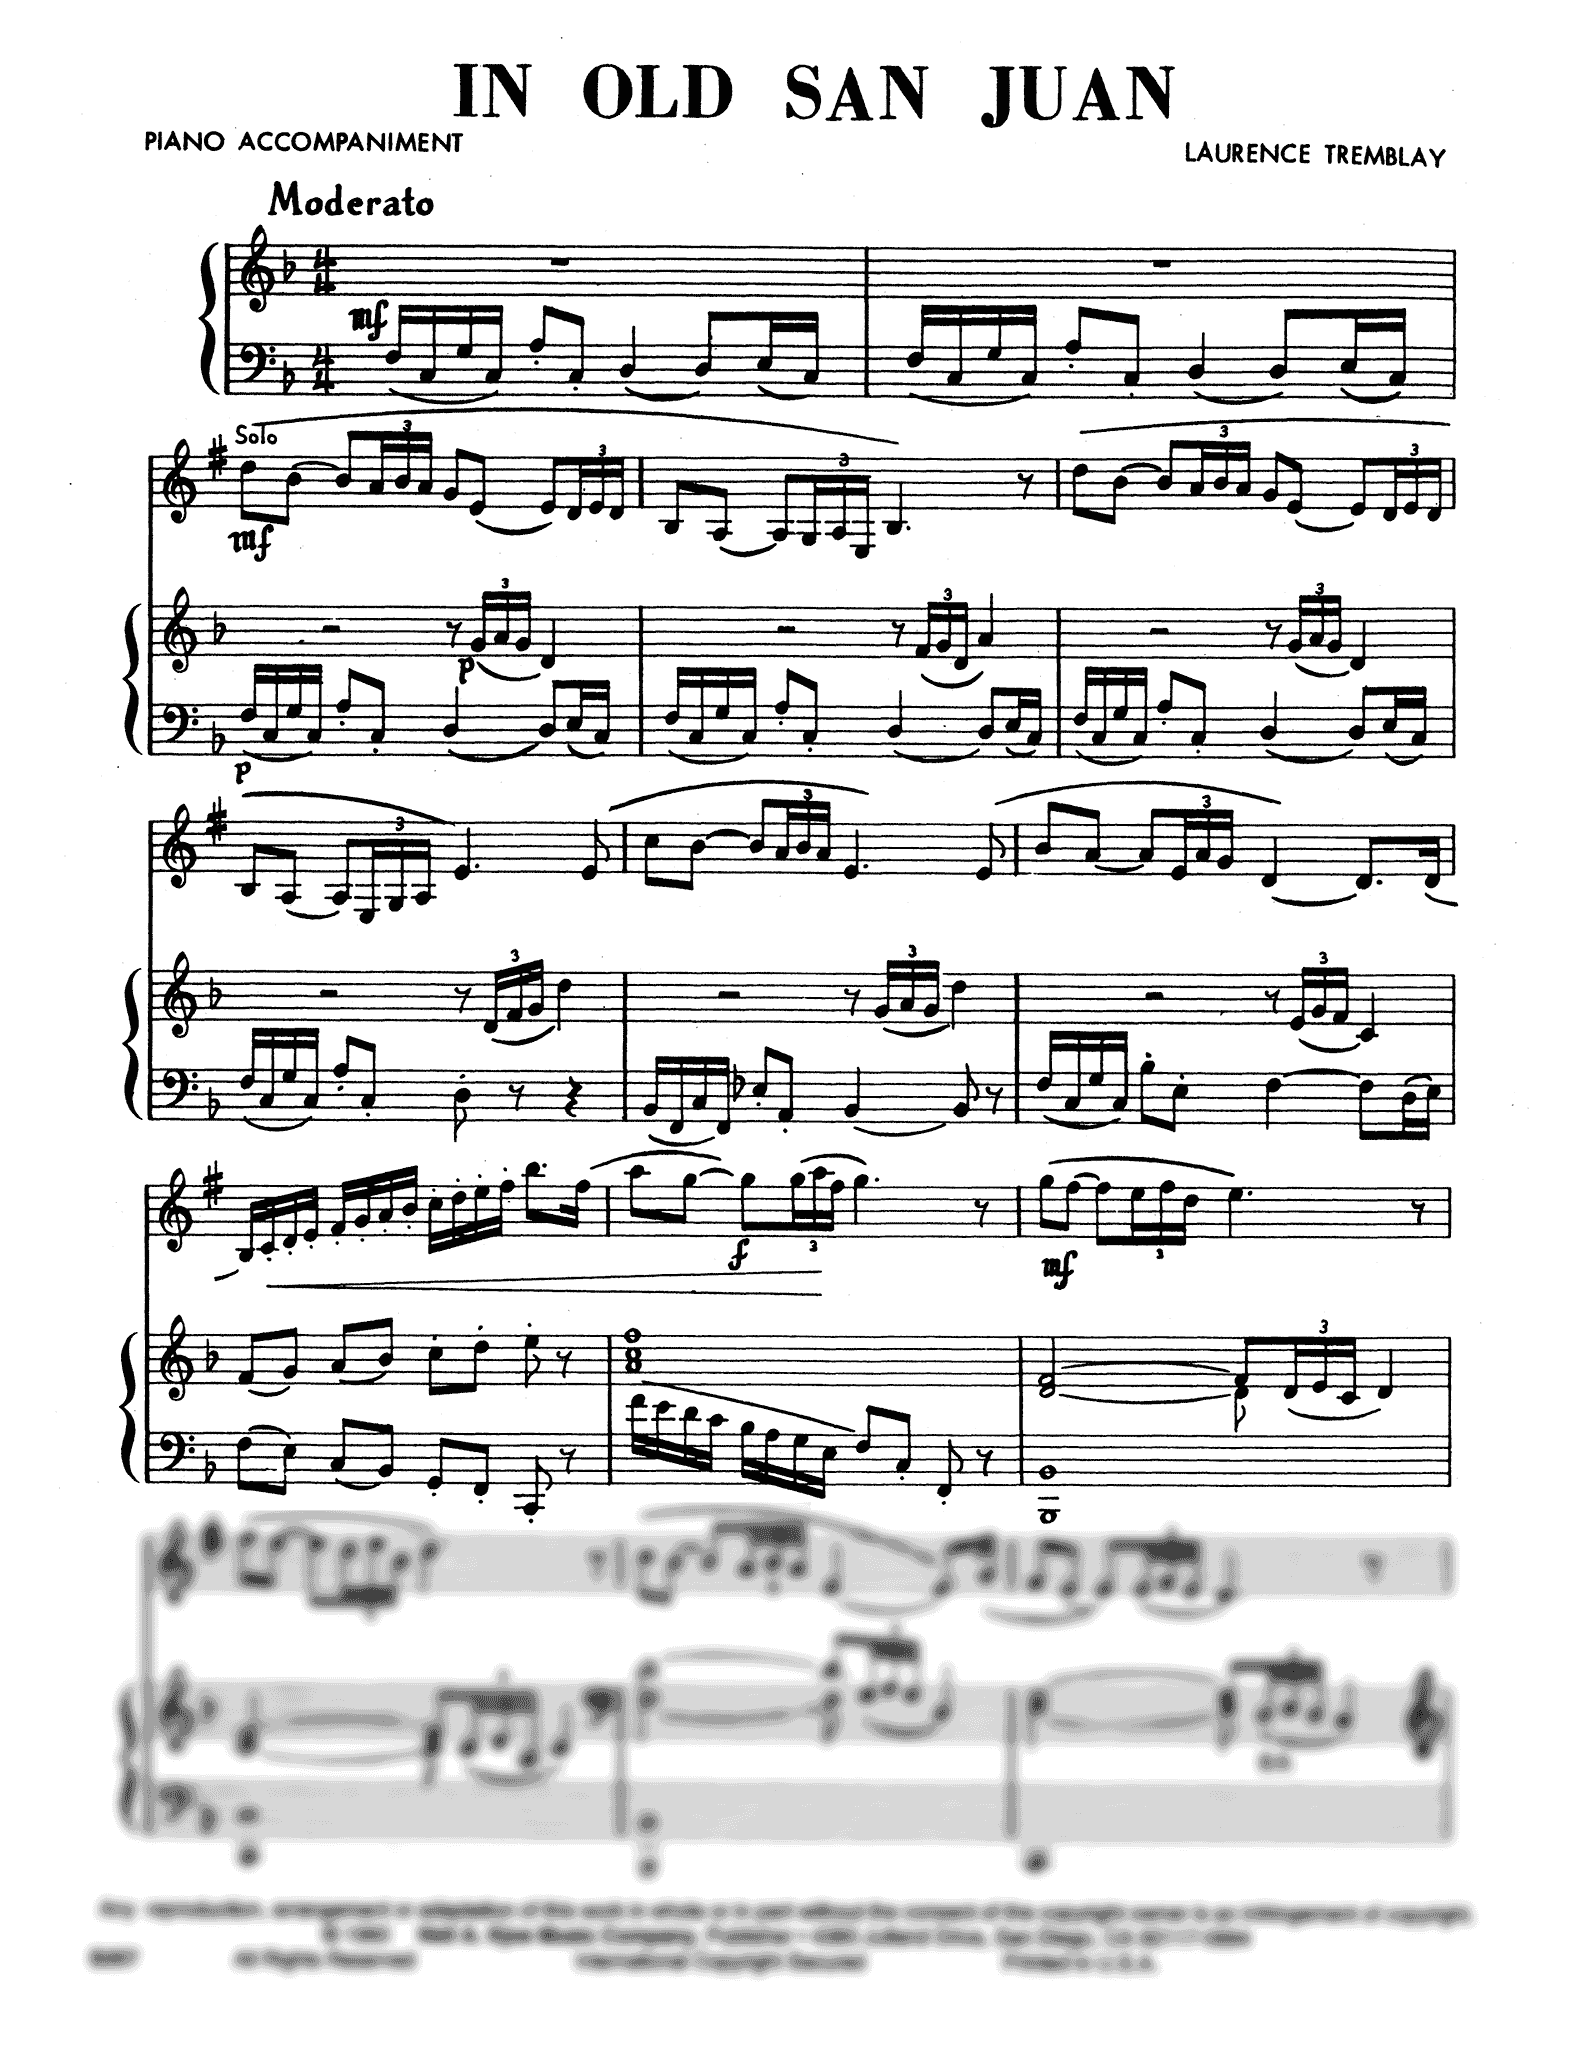 In Old San Juan Score